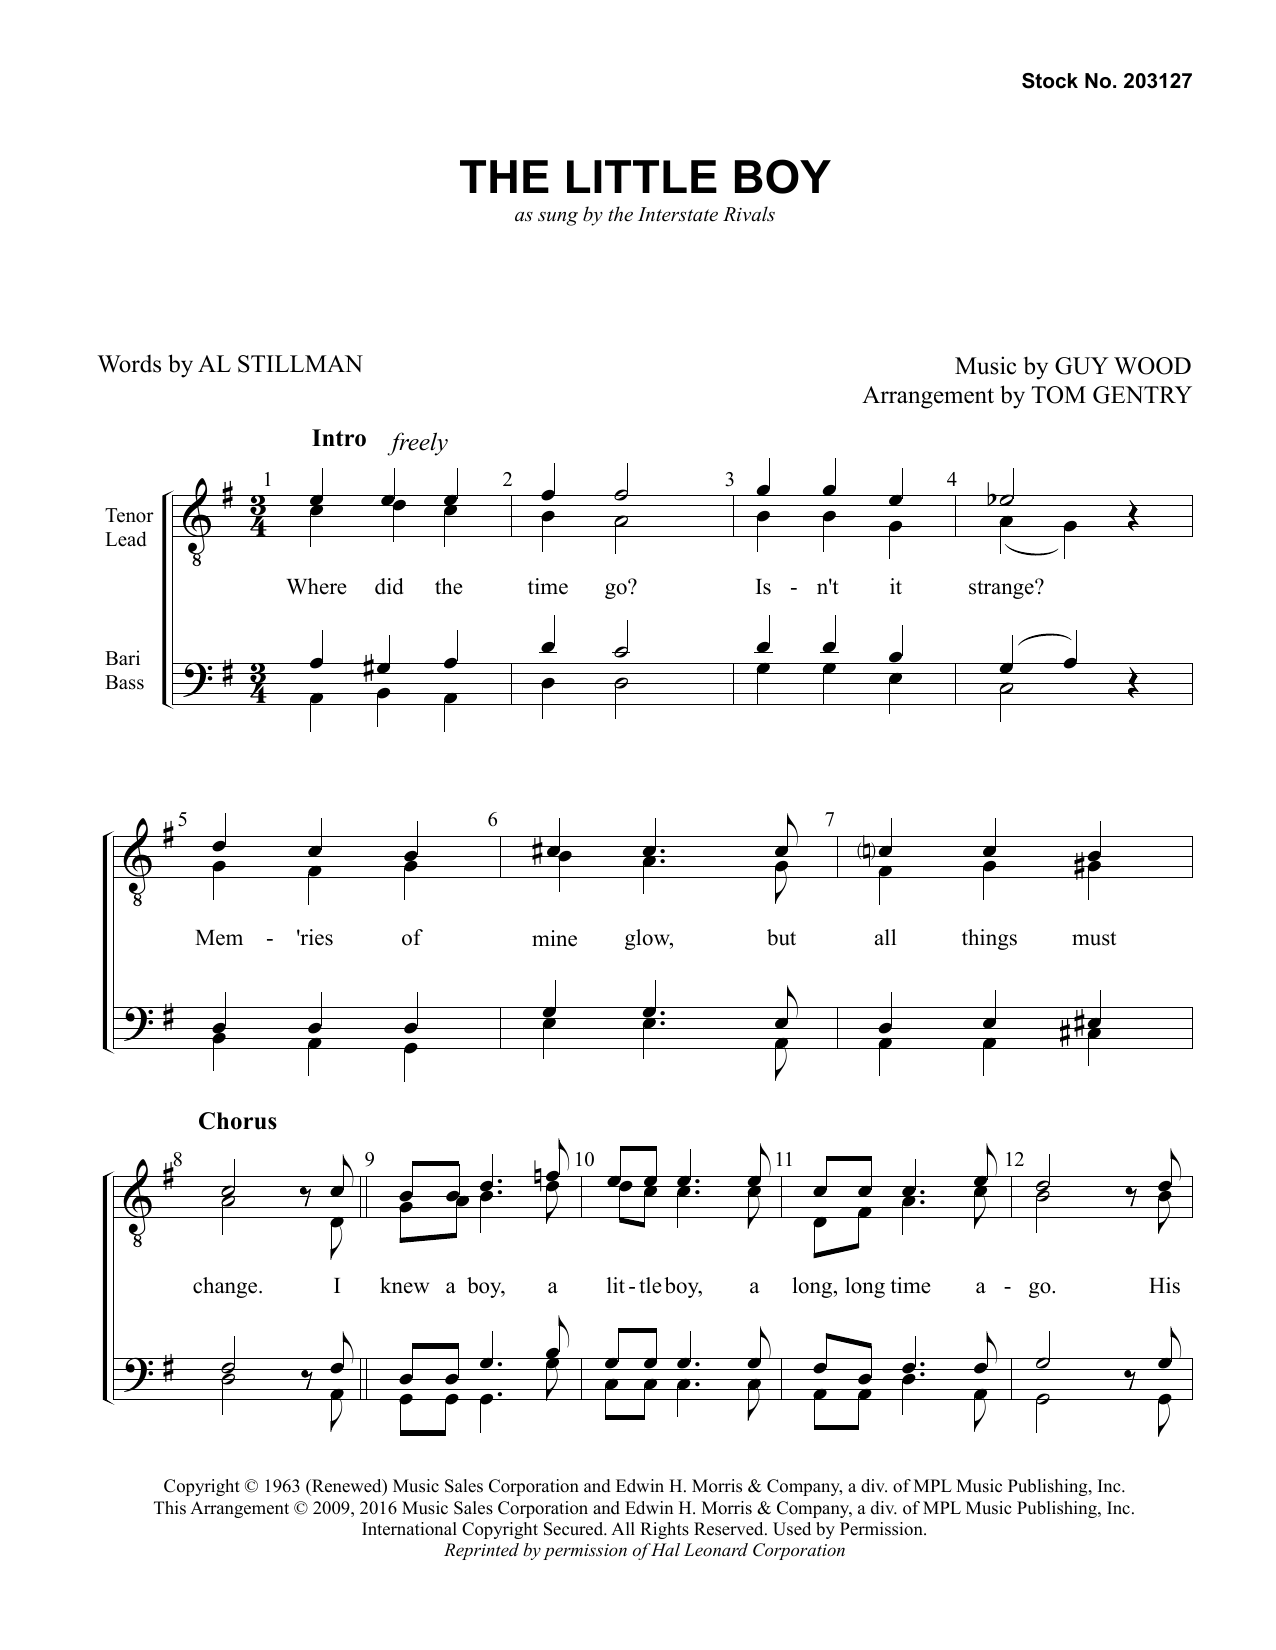 Interstate Rivals The Little Boy (arr. Tom Gentry) sheet music notes and chords arranged for TTBB Choir